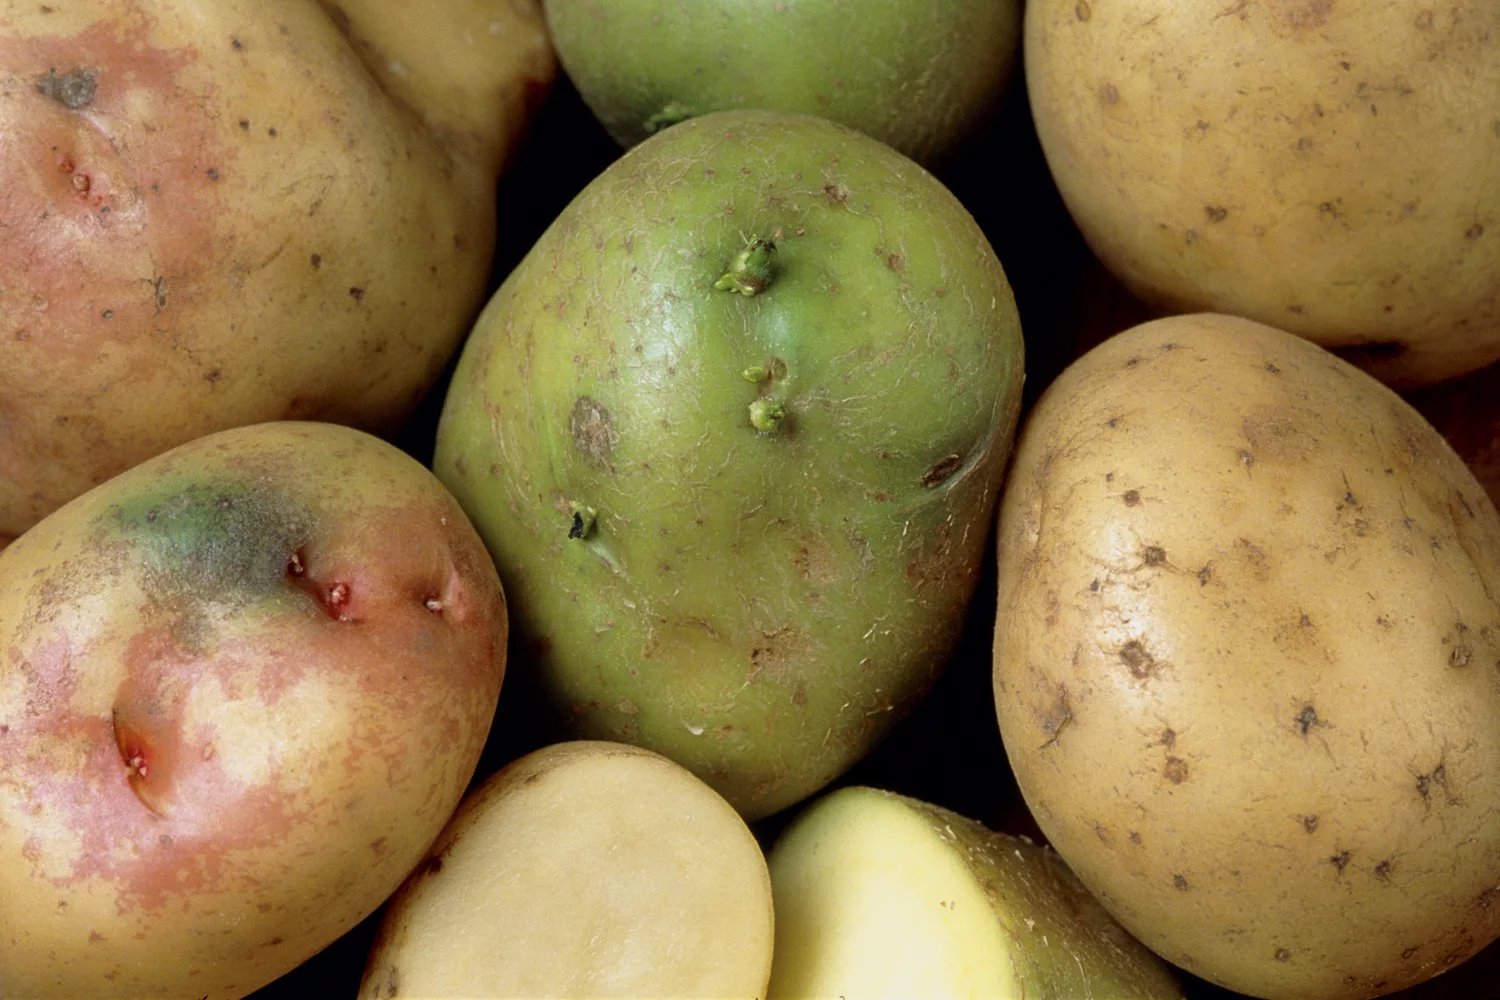 Poisonous potato update. Позеленение клубней картофеля. Соланин. Картошка зеленая Солонин. Солонин в картофеле.